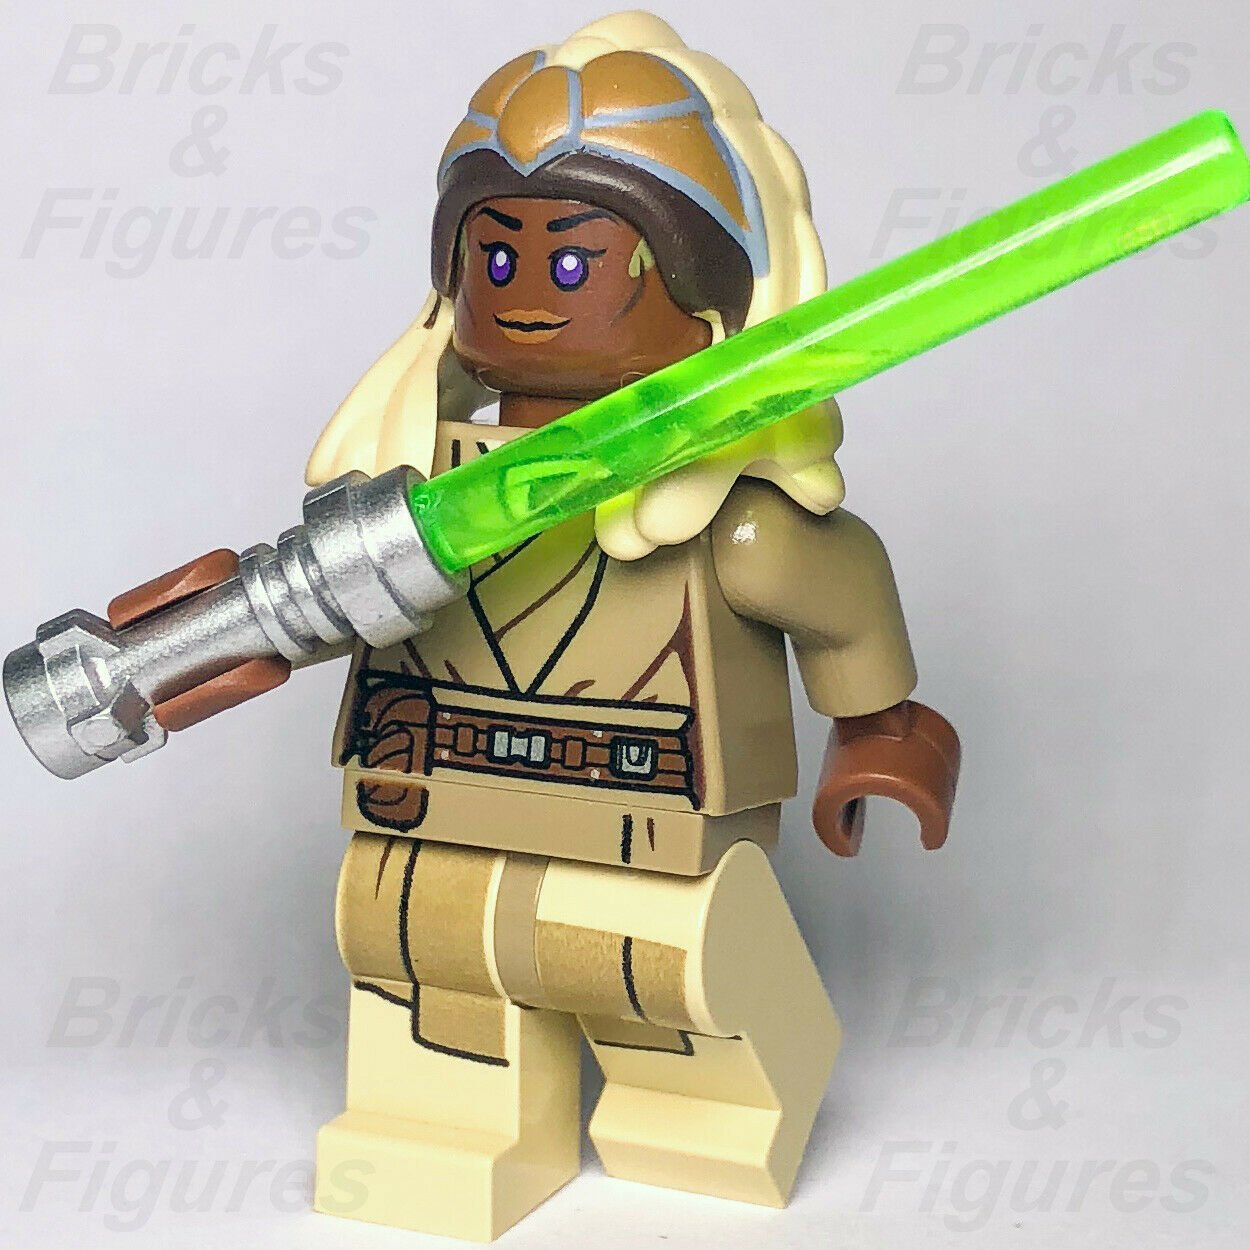 New Star Wars LEGO Stass Allie Jedi Master Knight General Minifigure 75016 - Bricks & Figures